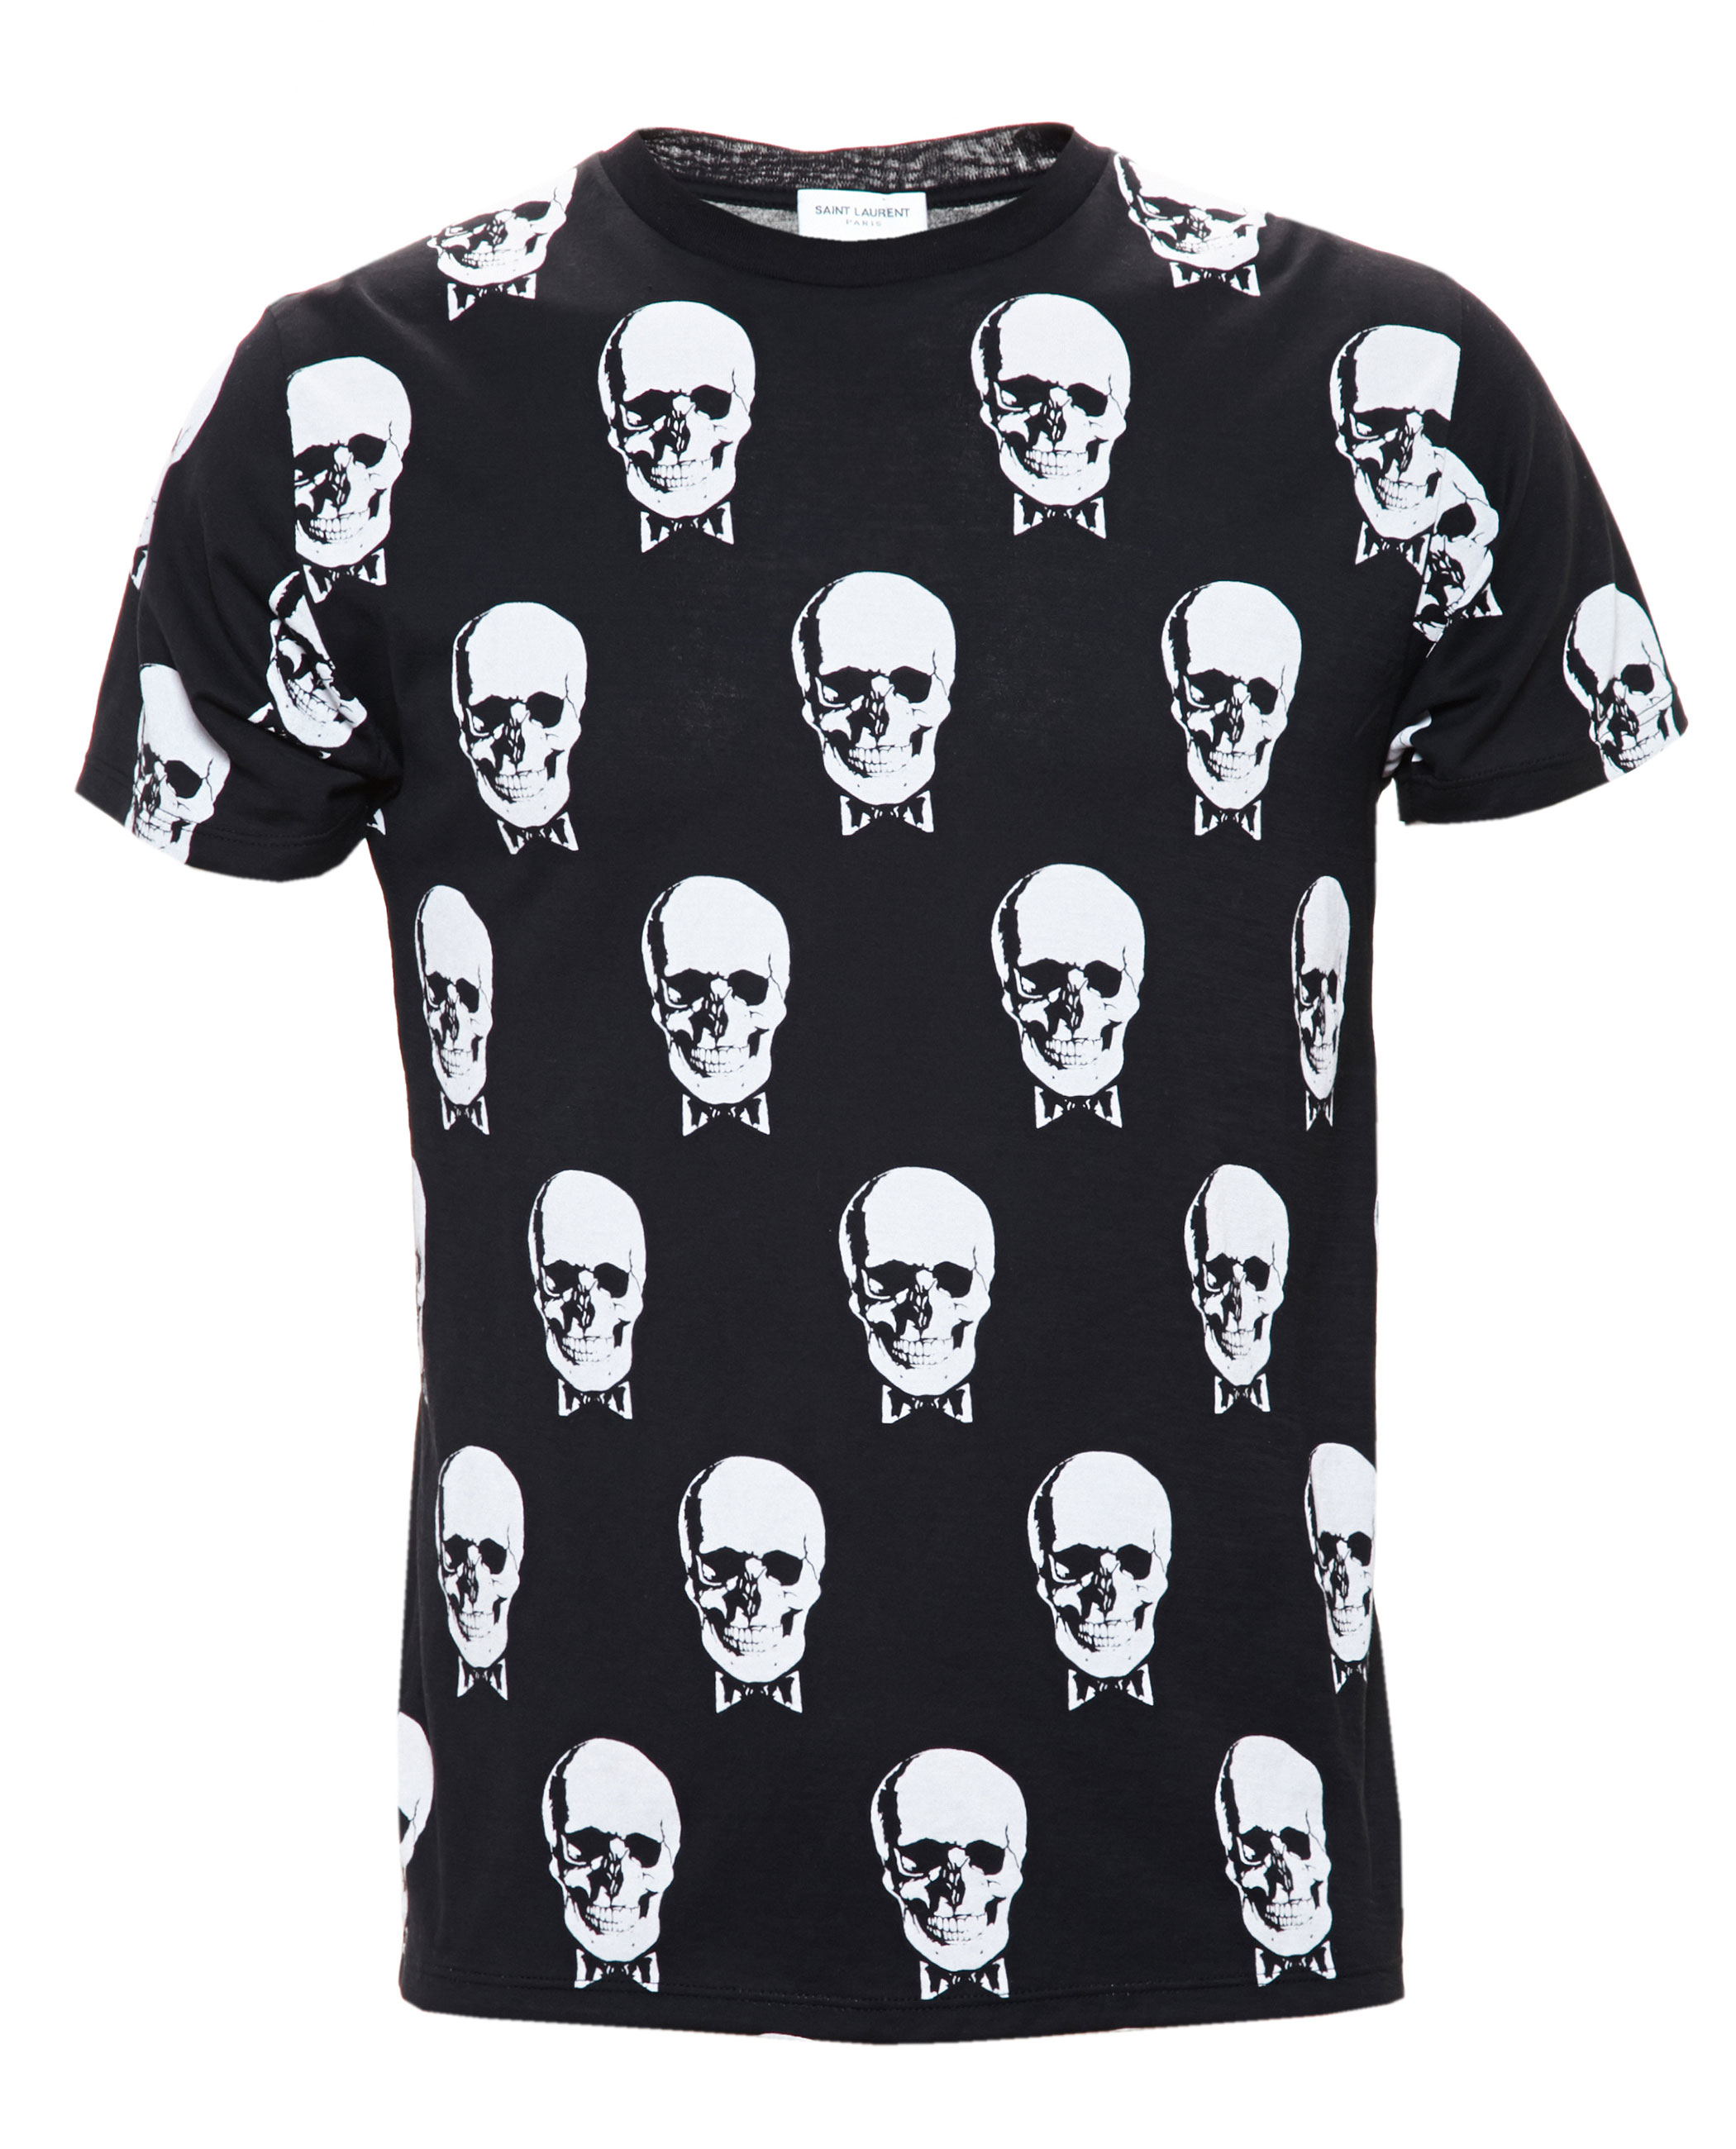 Lyst - Saint Laurent Skull-print Cotton-jersey T-shirt in Black for Men